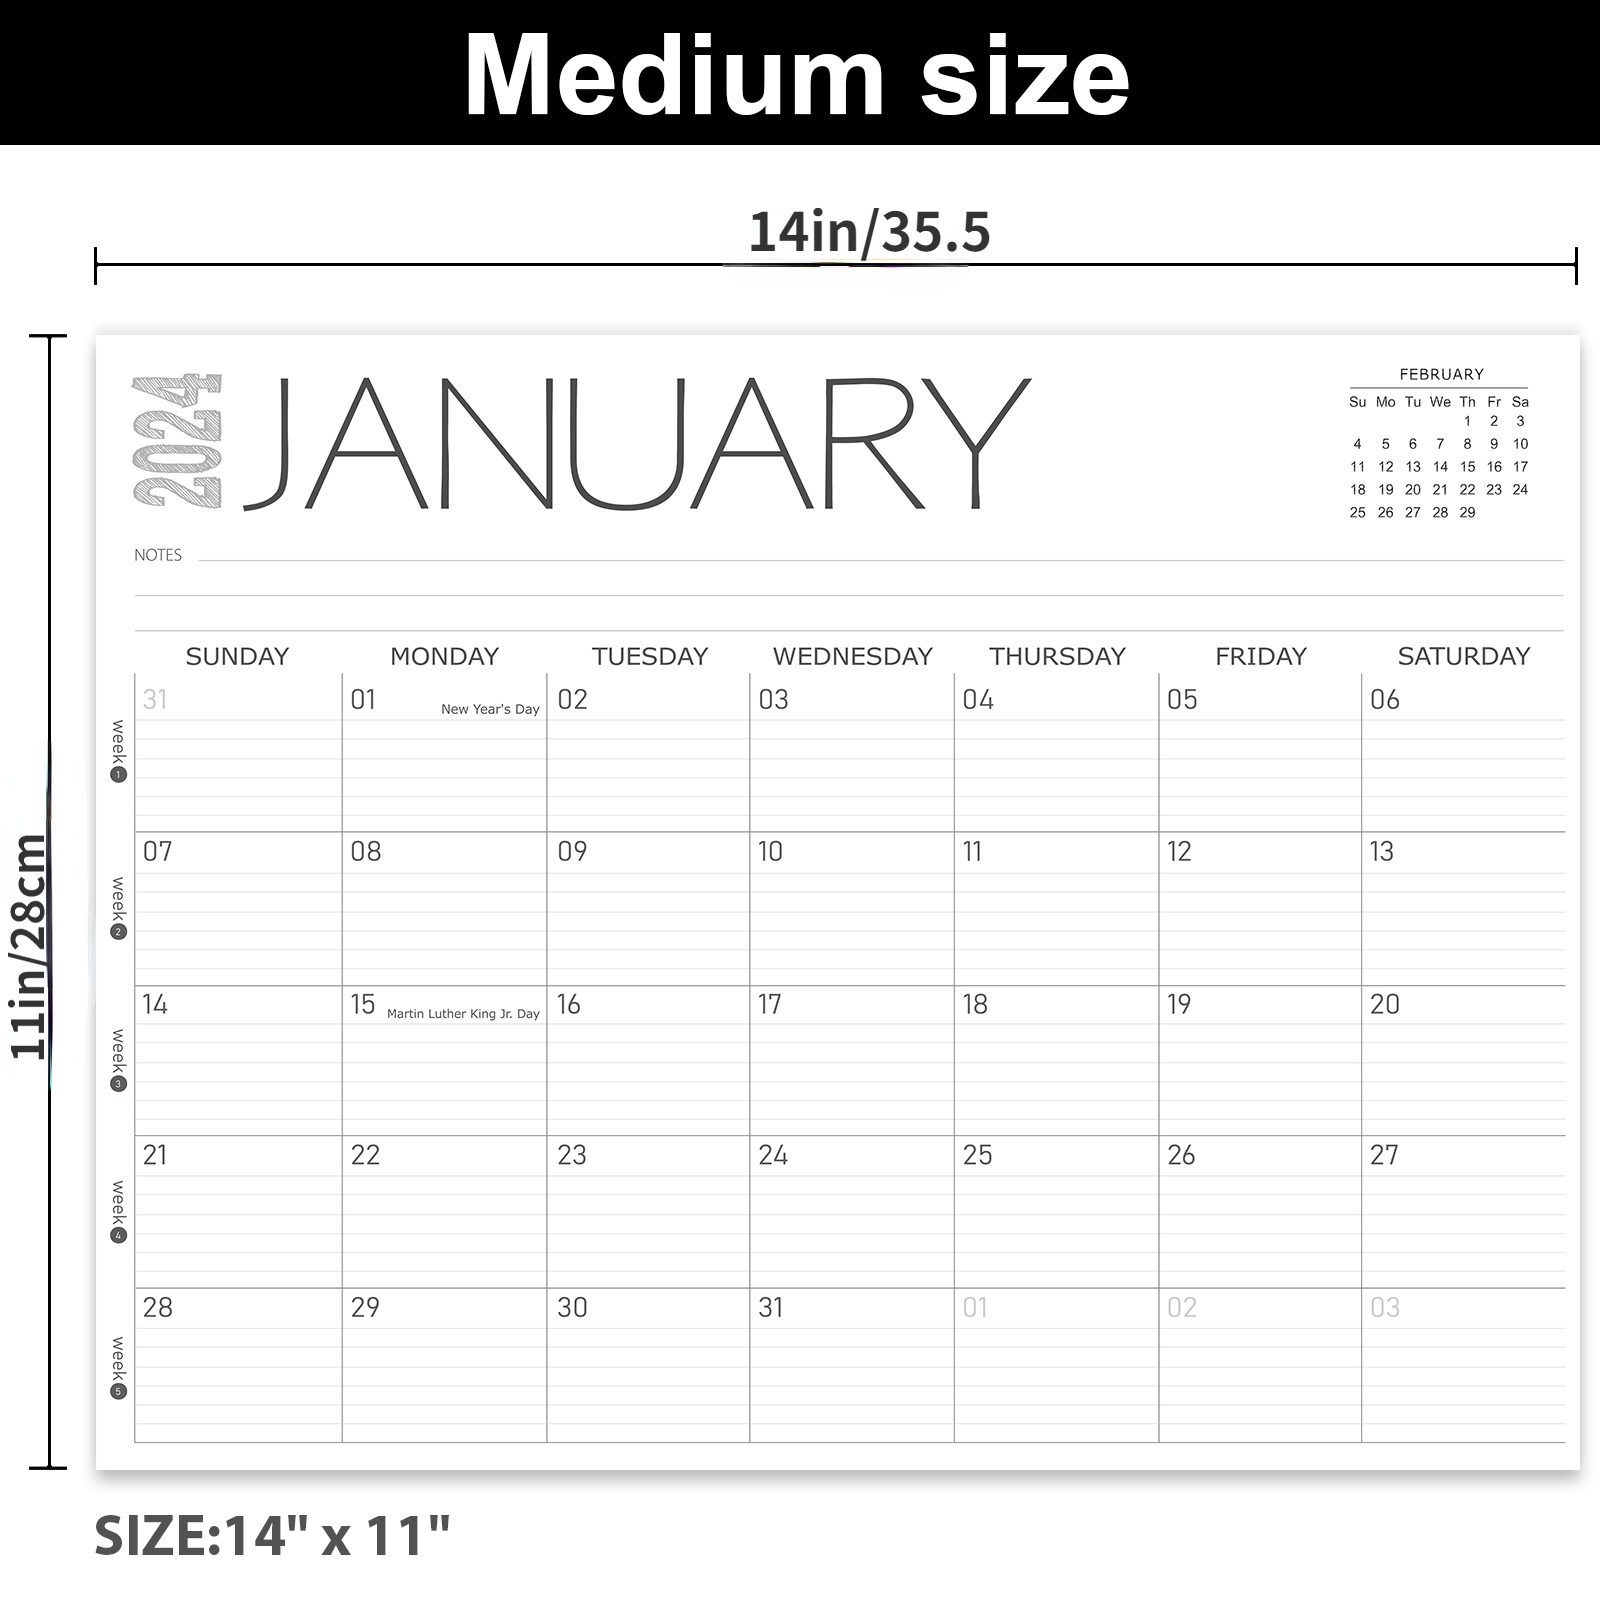 2024 Desk Calendar - January 2024 to December 2024 - Desk Calendar 2024  Large 17 x 12, Large Ruled Blocks, to-do List & Notes, Corner Protectors